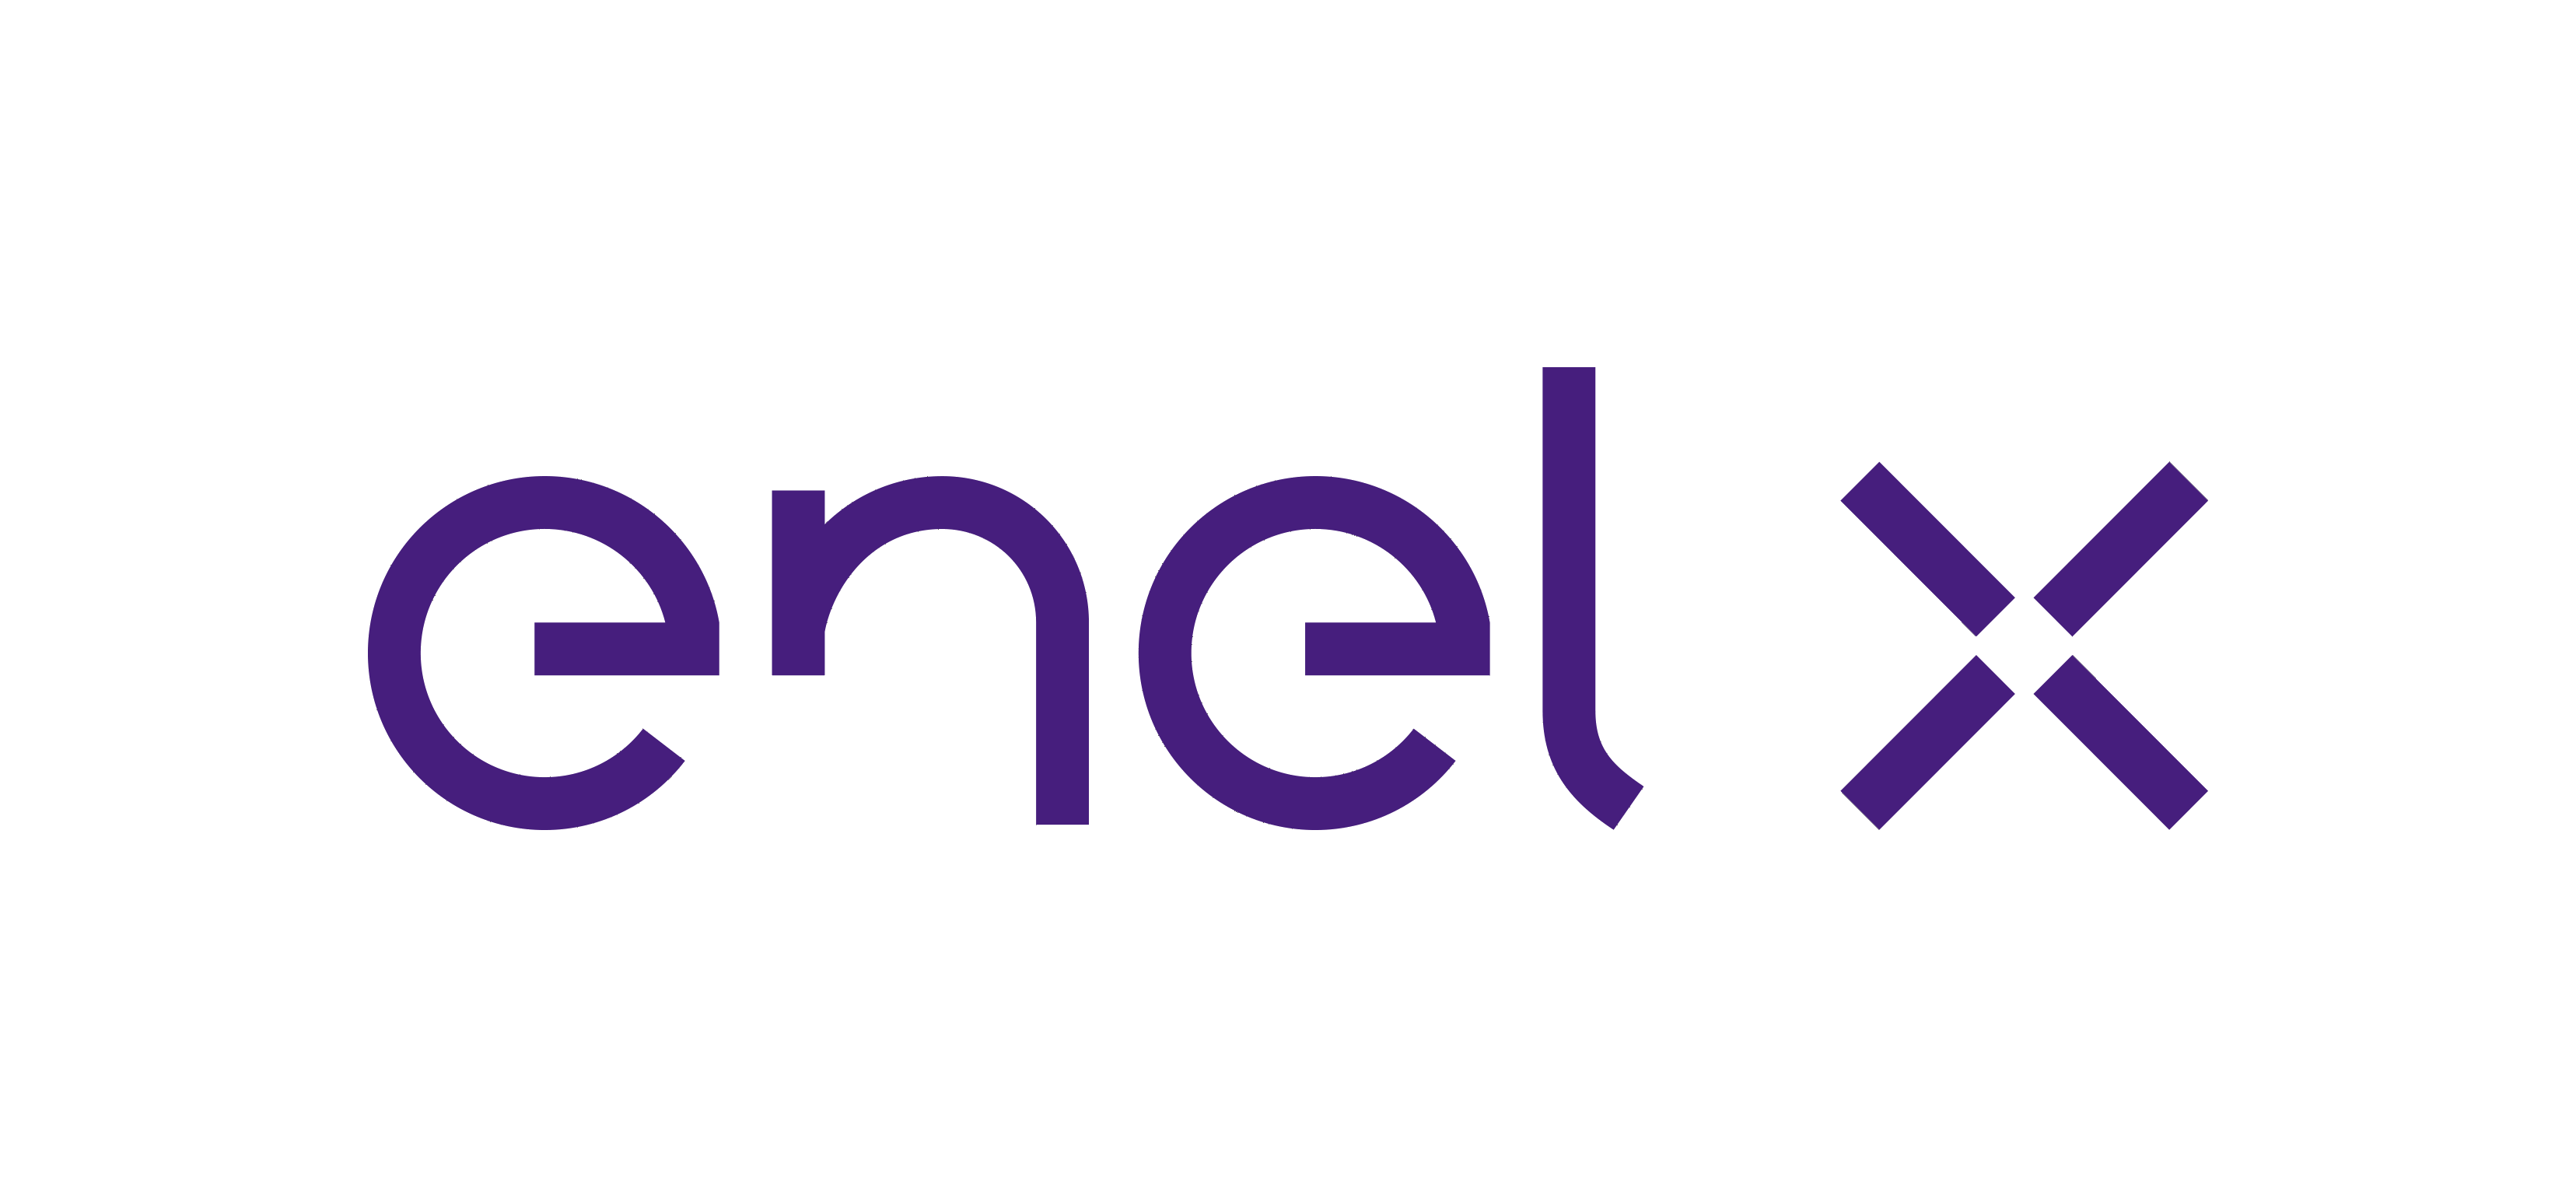 Navigant Logo - Enel X ranks third on the Navigant Leaderboard